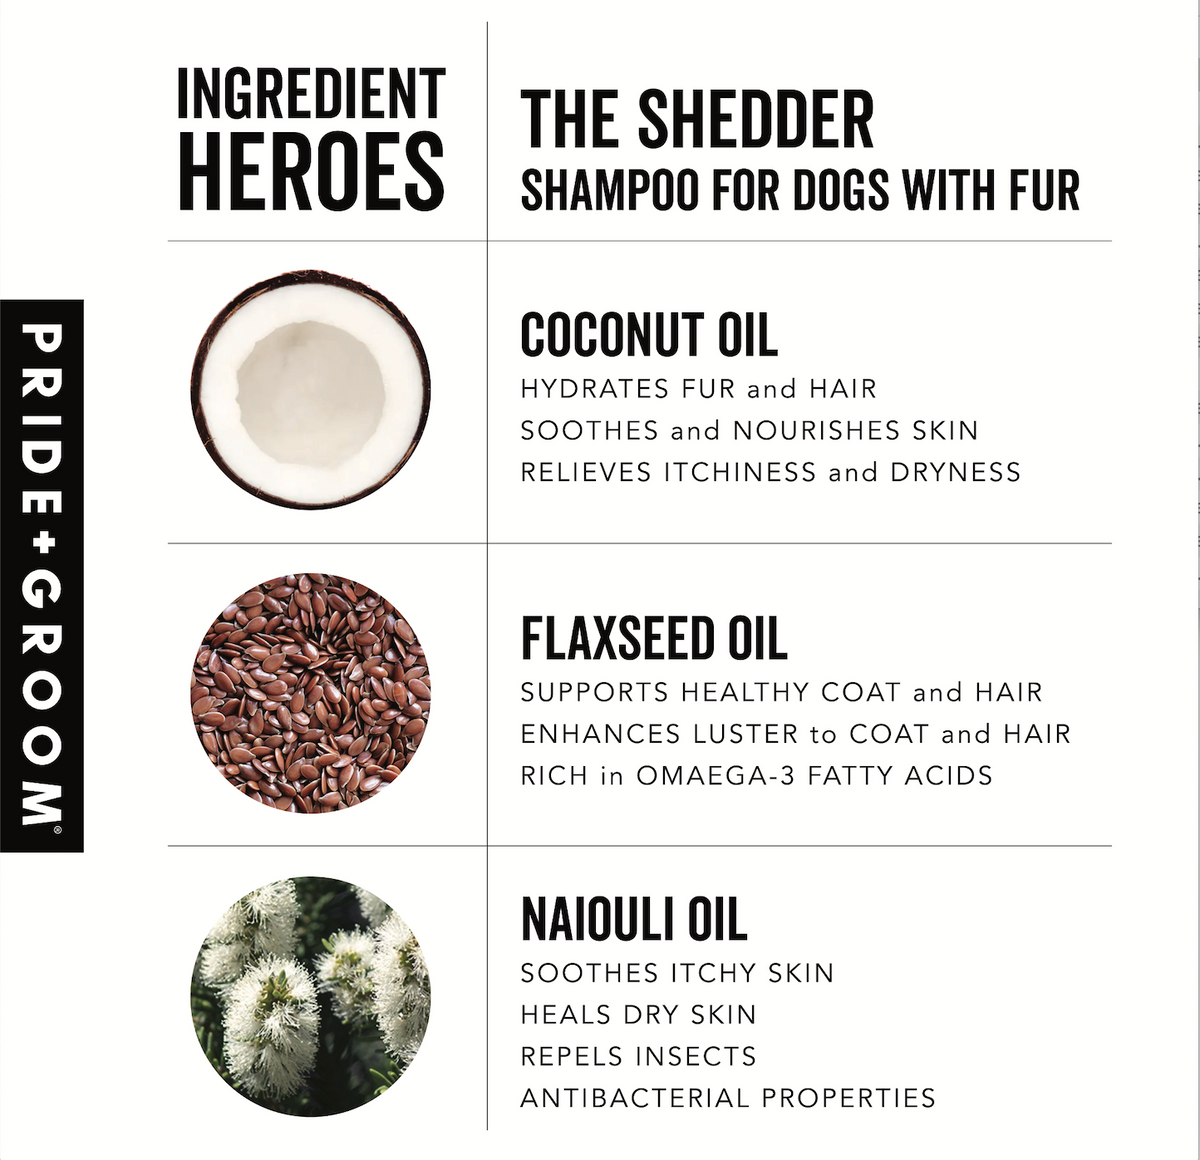 shedder shampoo for dogs in bulk, shedding dog shampoo wholesale, professional dog shampoo for groomers, coat specific dog shampoo in bulk, 12oz, ingredients